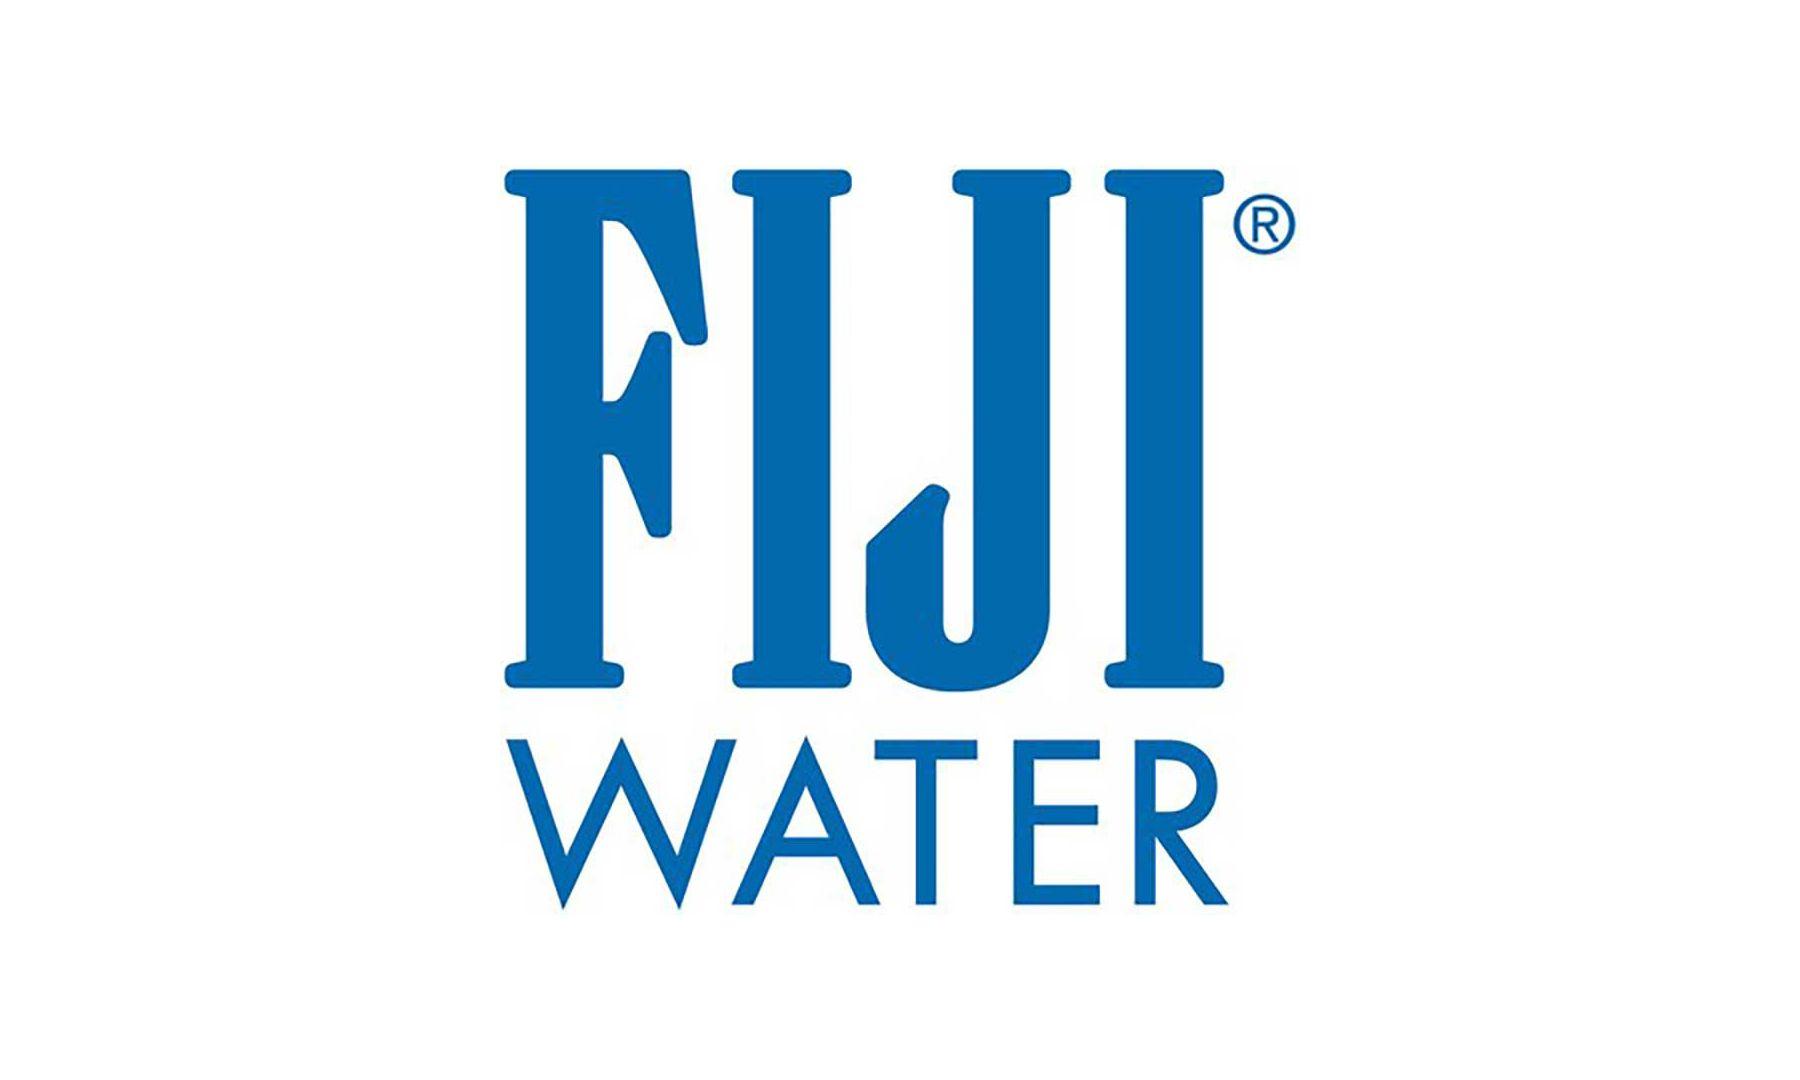 Fiji Logo - Fiji Water Ends Distribution Partnership With Keurig Dr Pepper